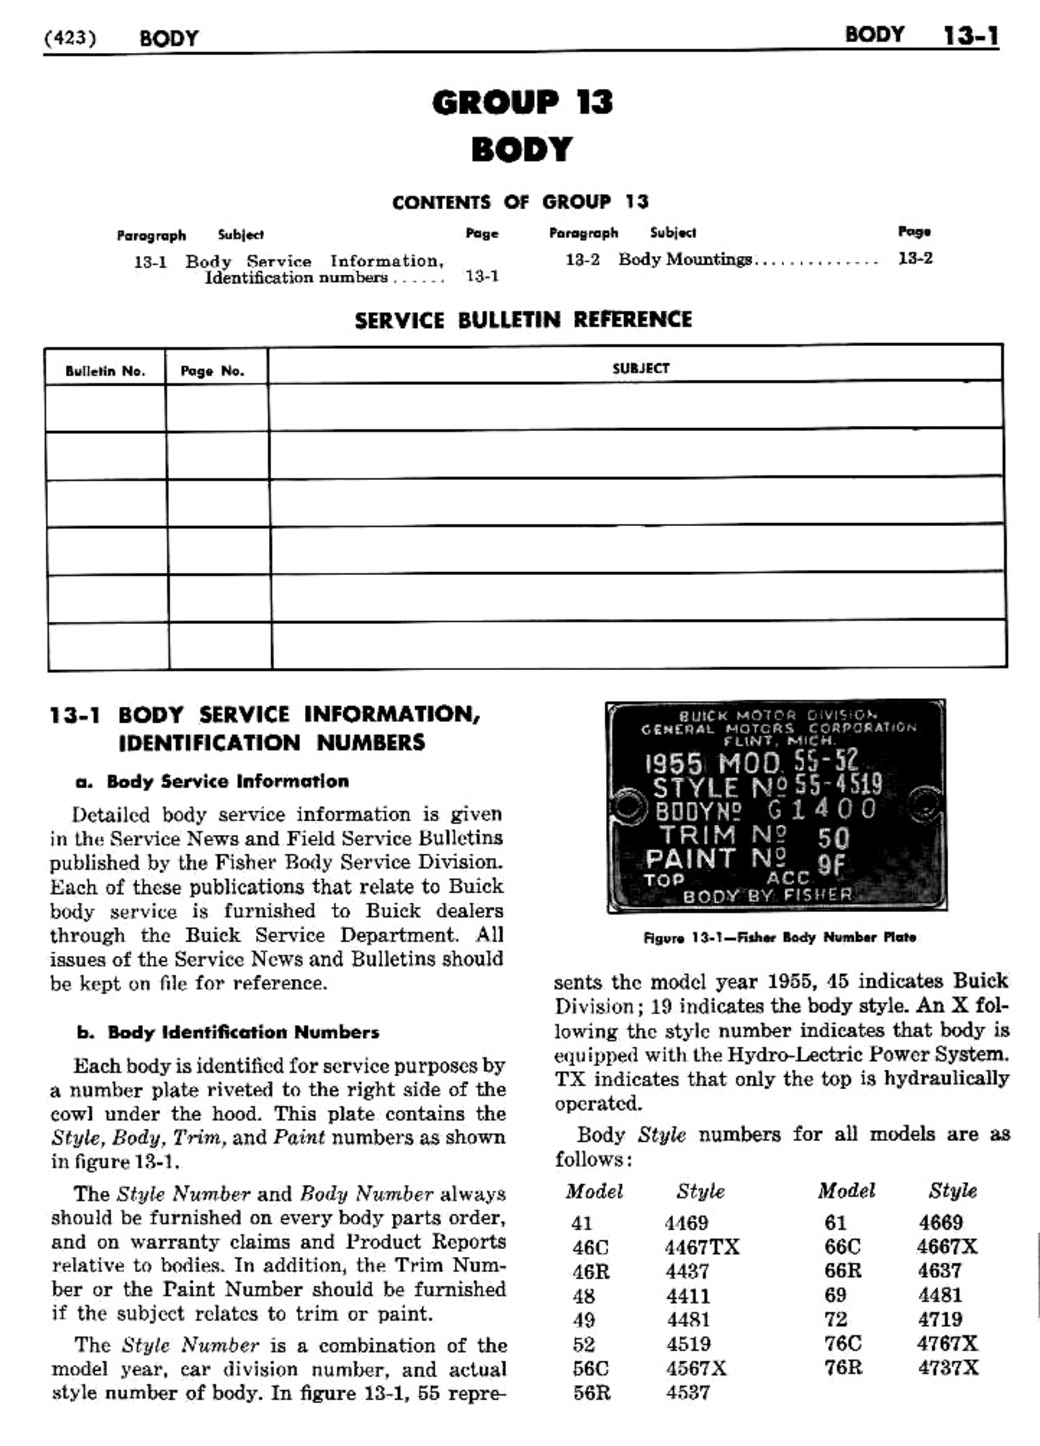 n_14 1955 Buick Shop Manual - Body-001-001.jpg